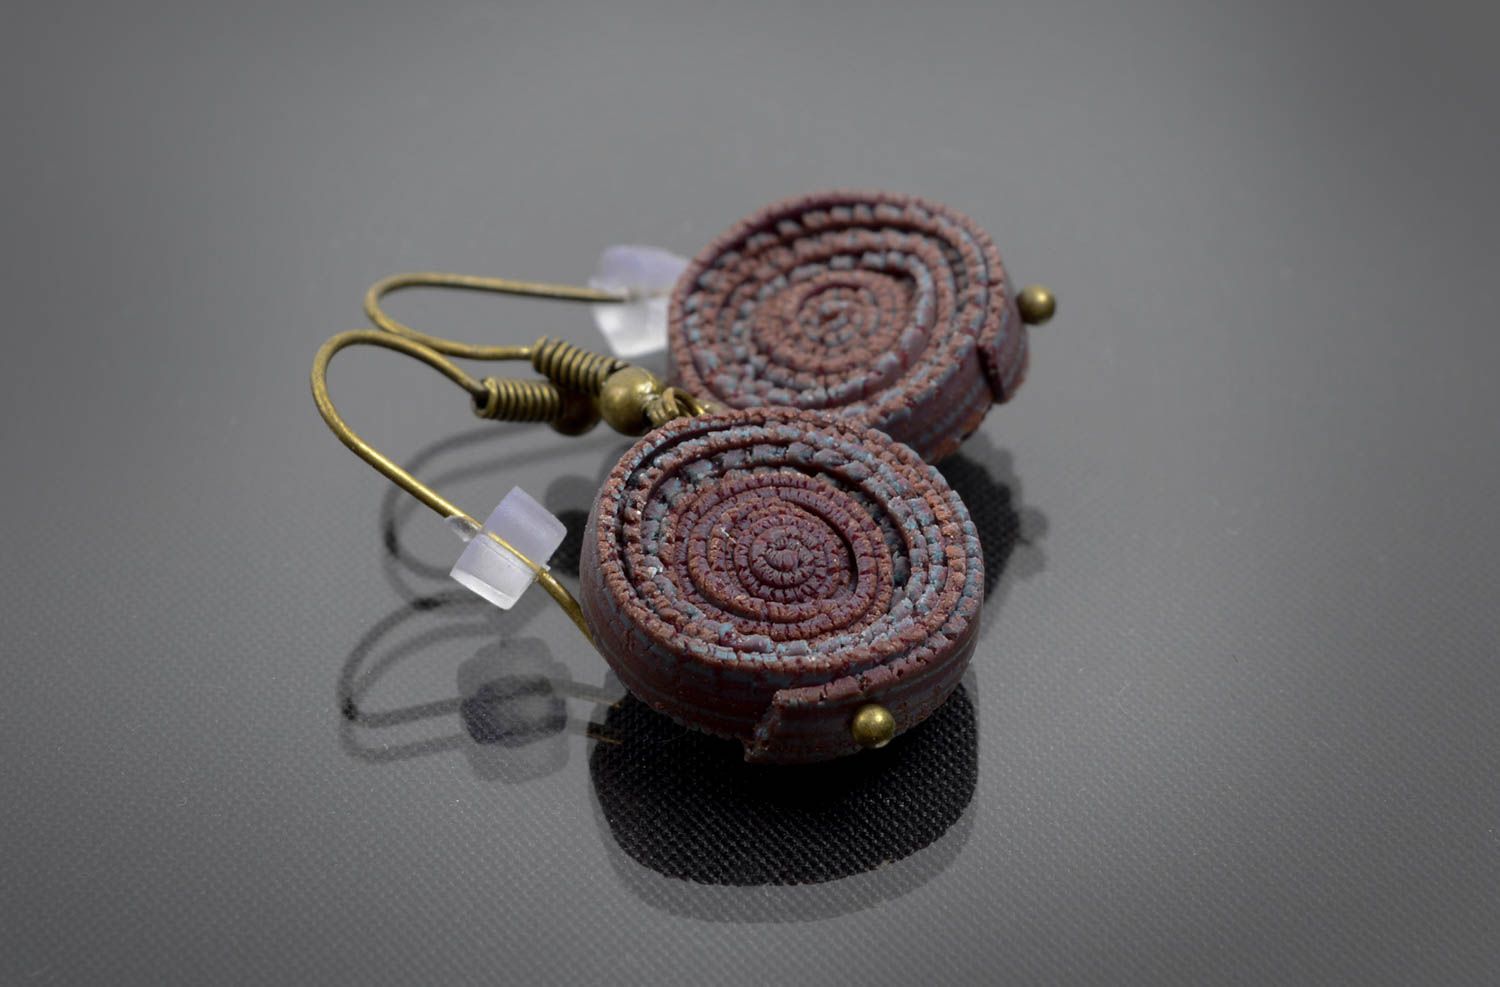 Plastic earrings flower earrings molded earrings with charms handmade jewelry photo 5